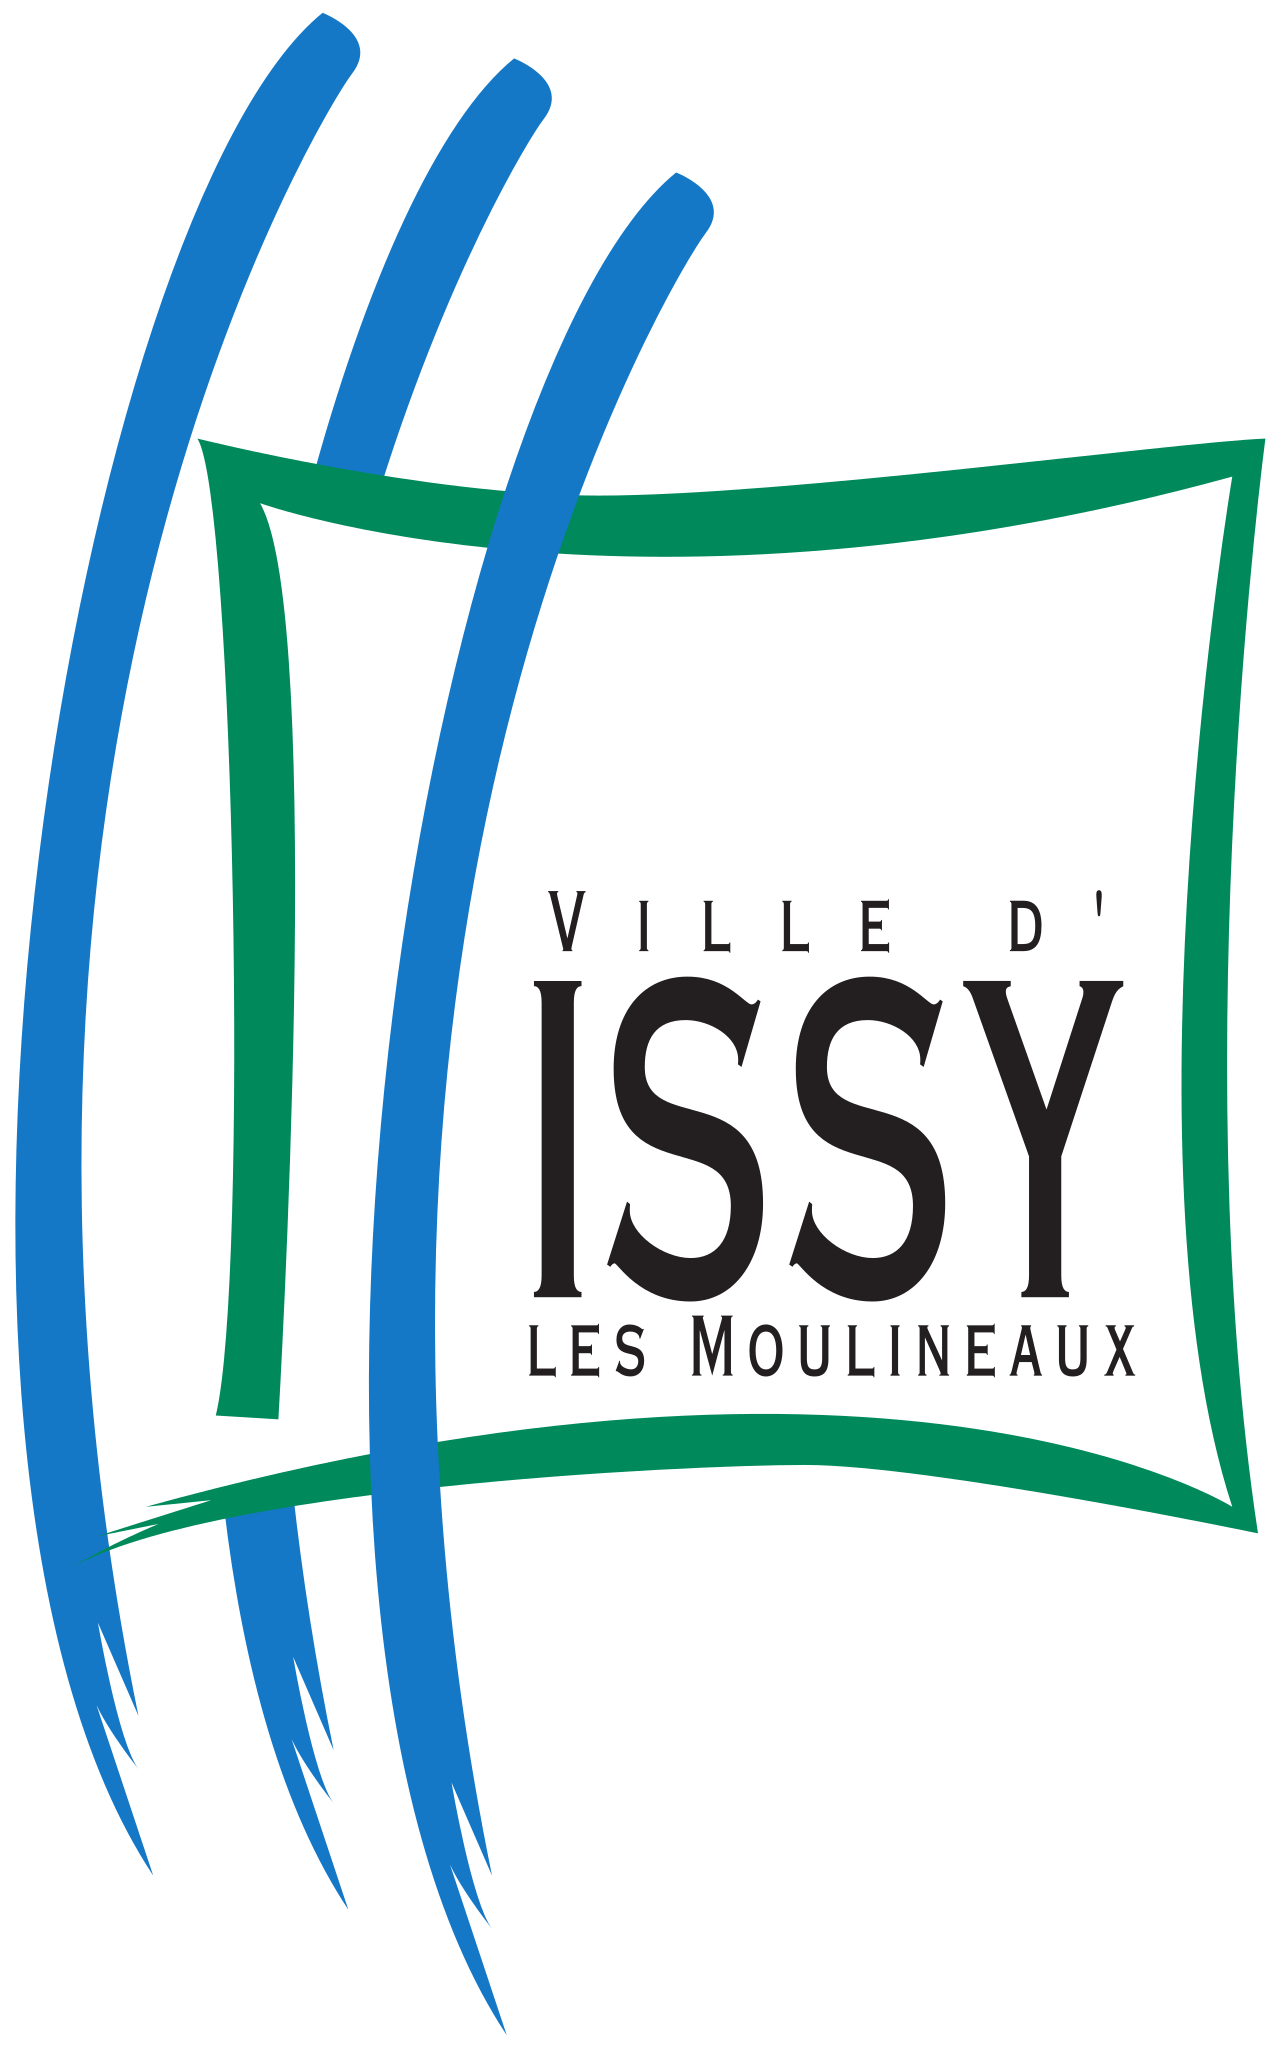 Issy-les-Moulineaux